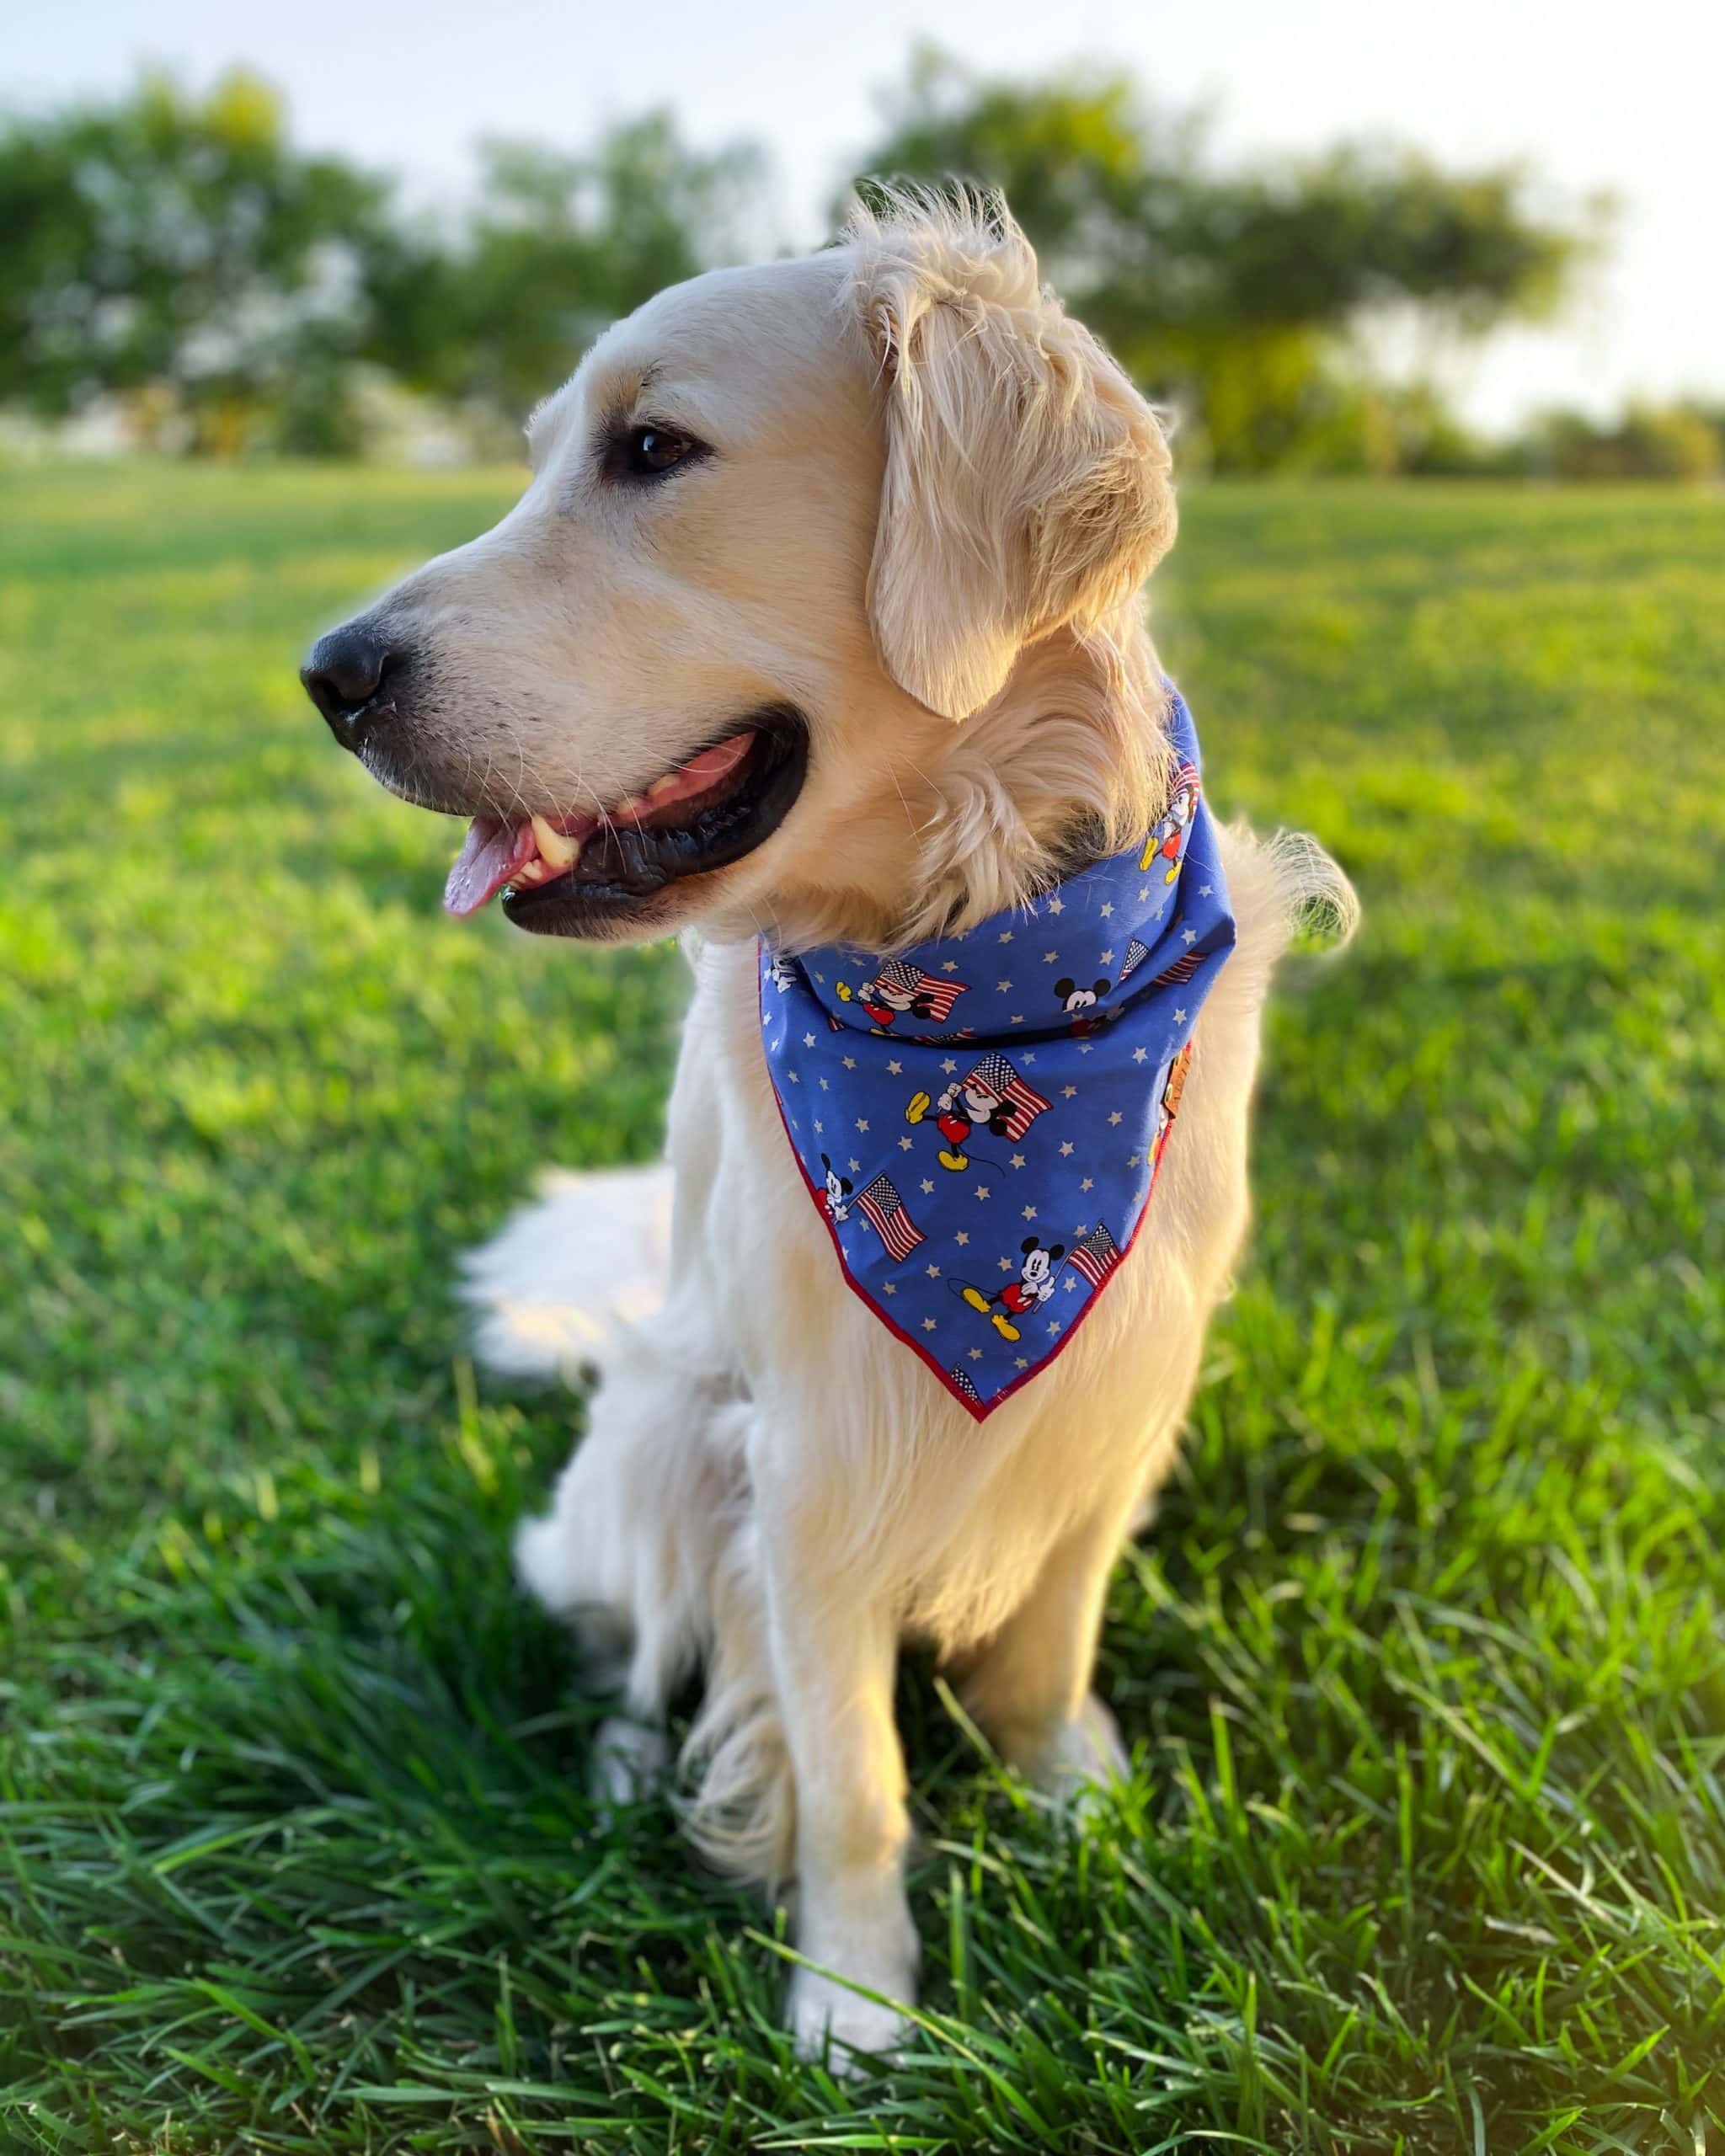 Golden Retriever wearing a patriotic 4th of july blue dog bandana